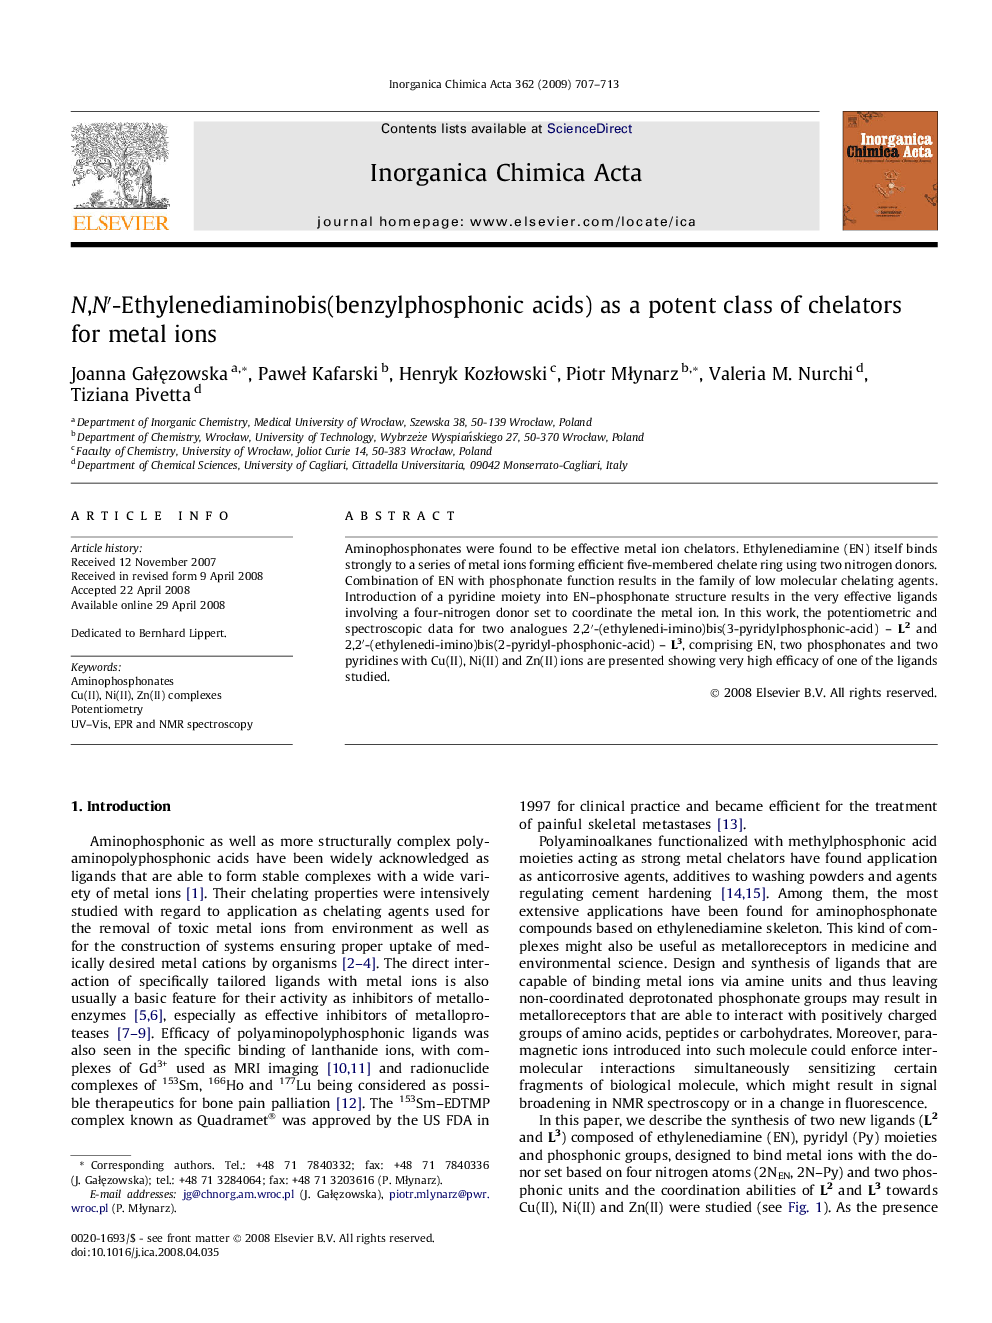 N,N′-Ethylenediaminobis(benzylphosphonic acids) as a potent class of chelators for metal ions